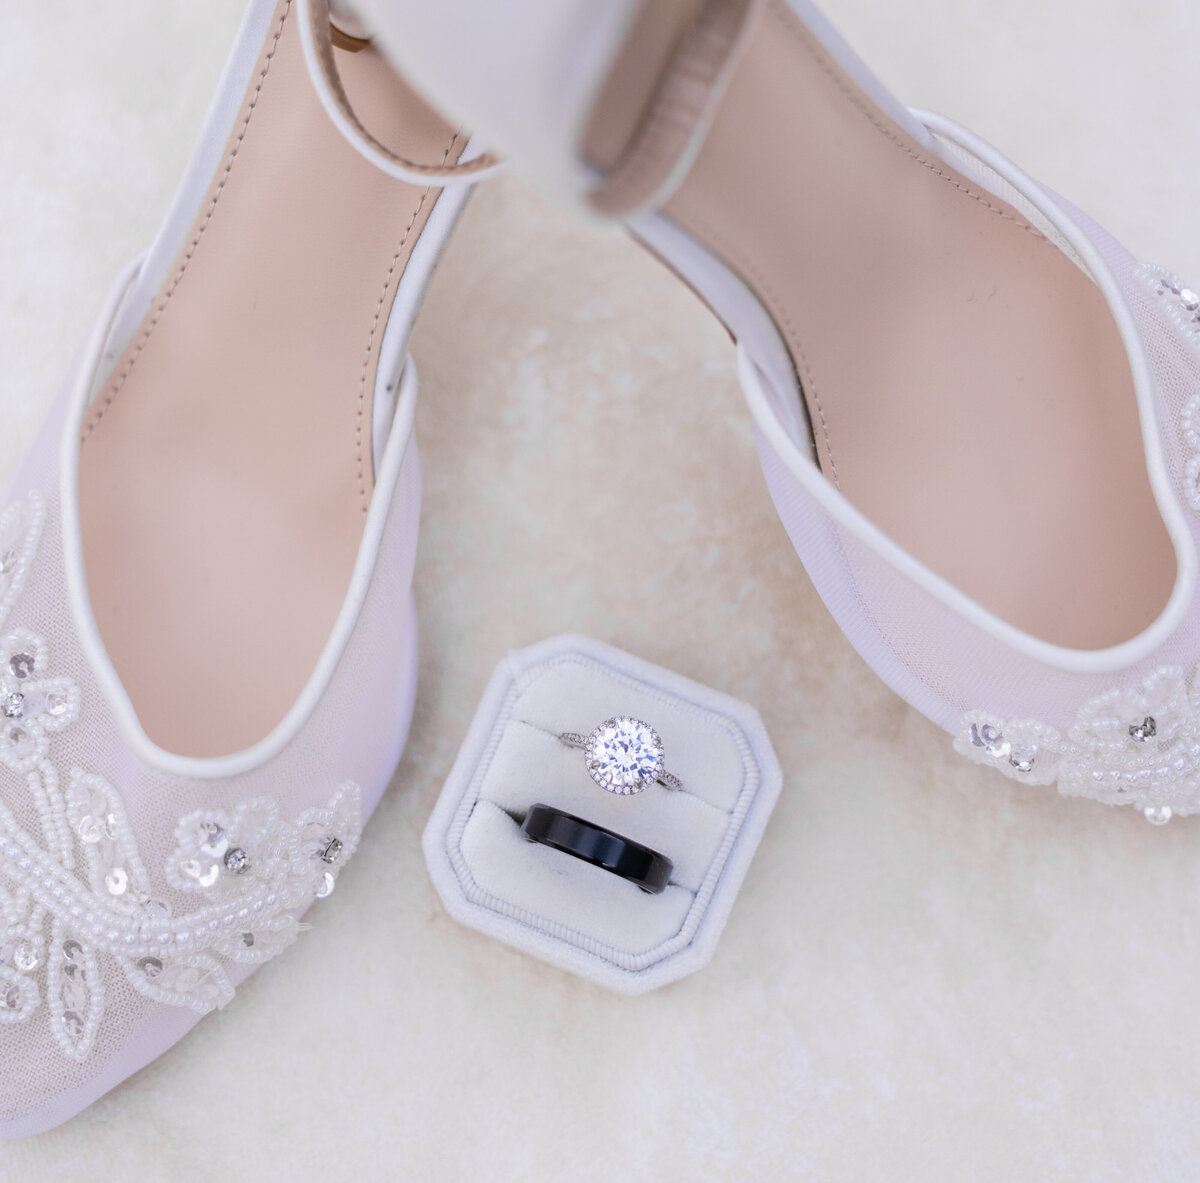 bridal shoes and wedding ring details by Tampa Wedding photographer Amanda Richardson Photography